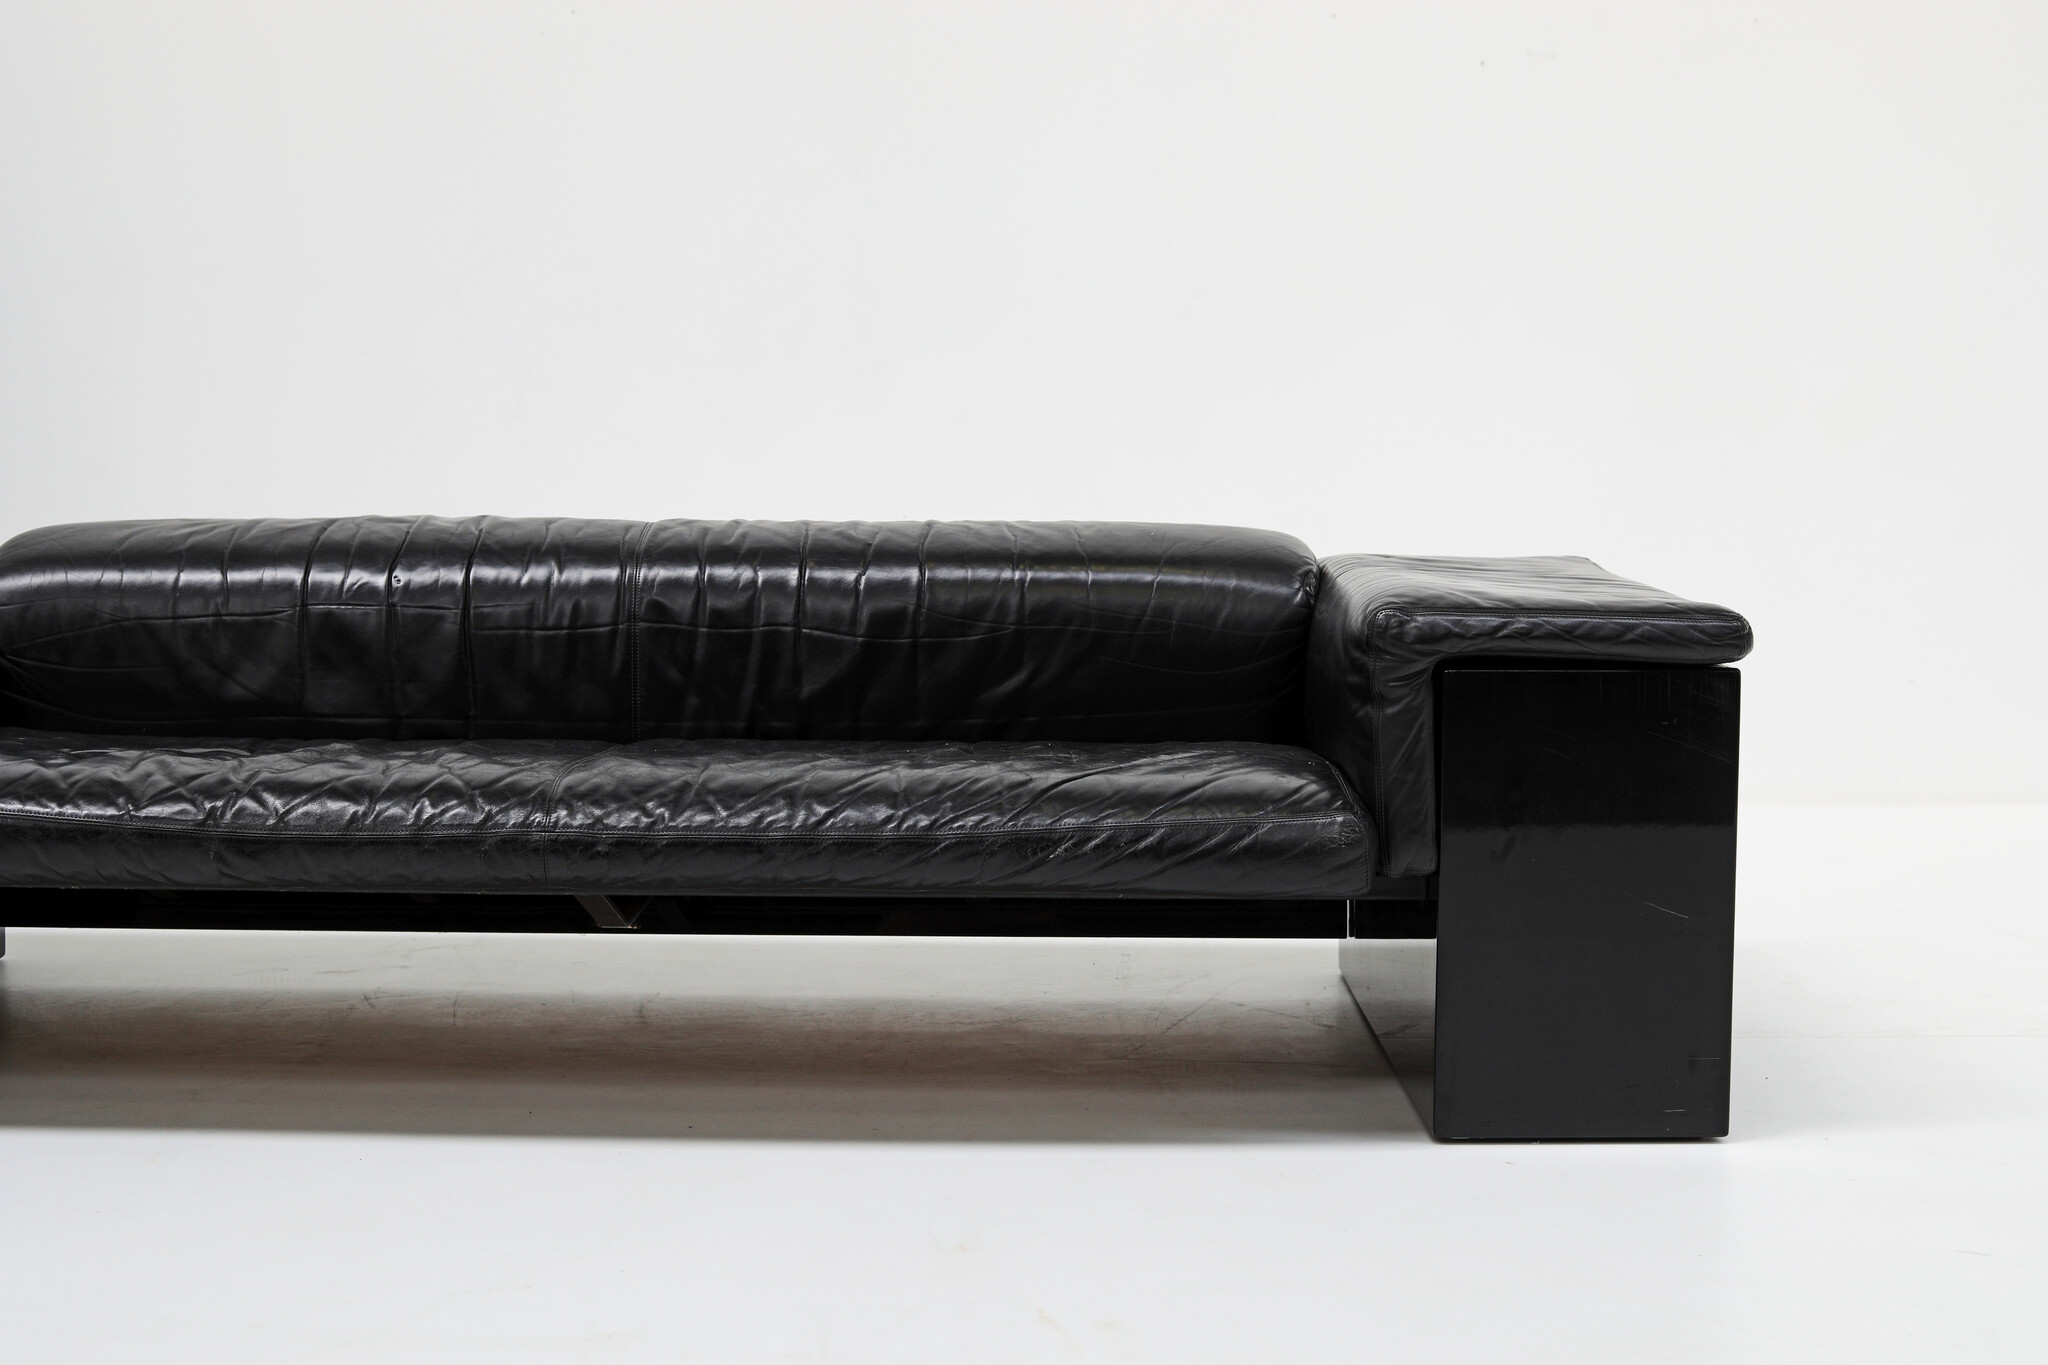 Cini Boeri sofa manufactured by Knoll, 1970's